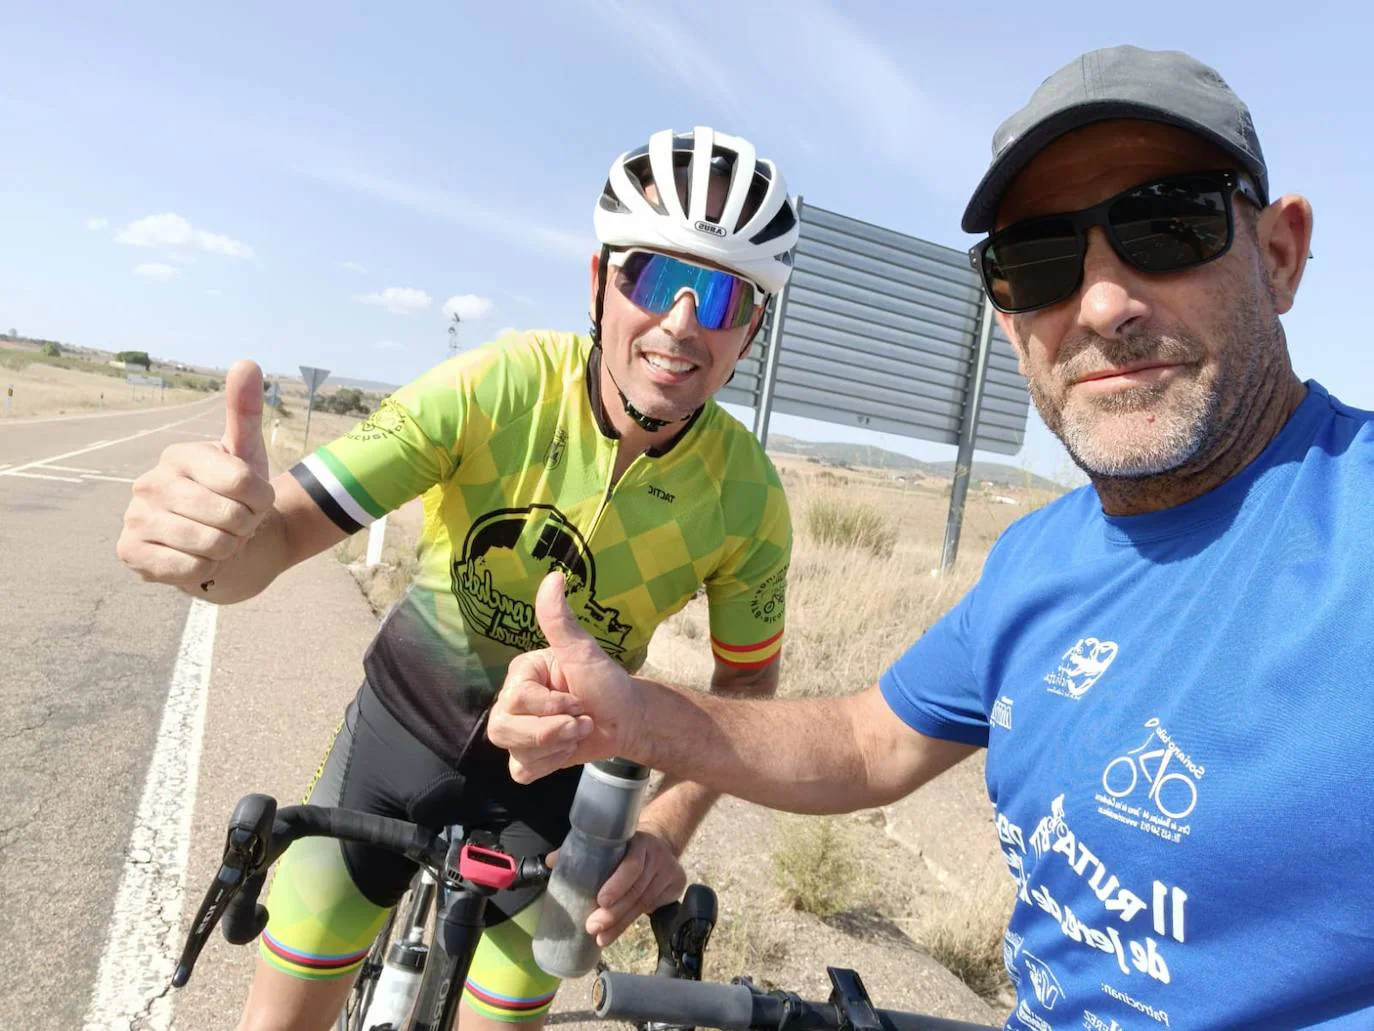 Imagen secundaria 1 - Raúl Rasero recorrió en bicicleta 150 kilómetros a beneficio de la ADMO